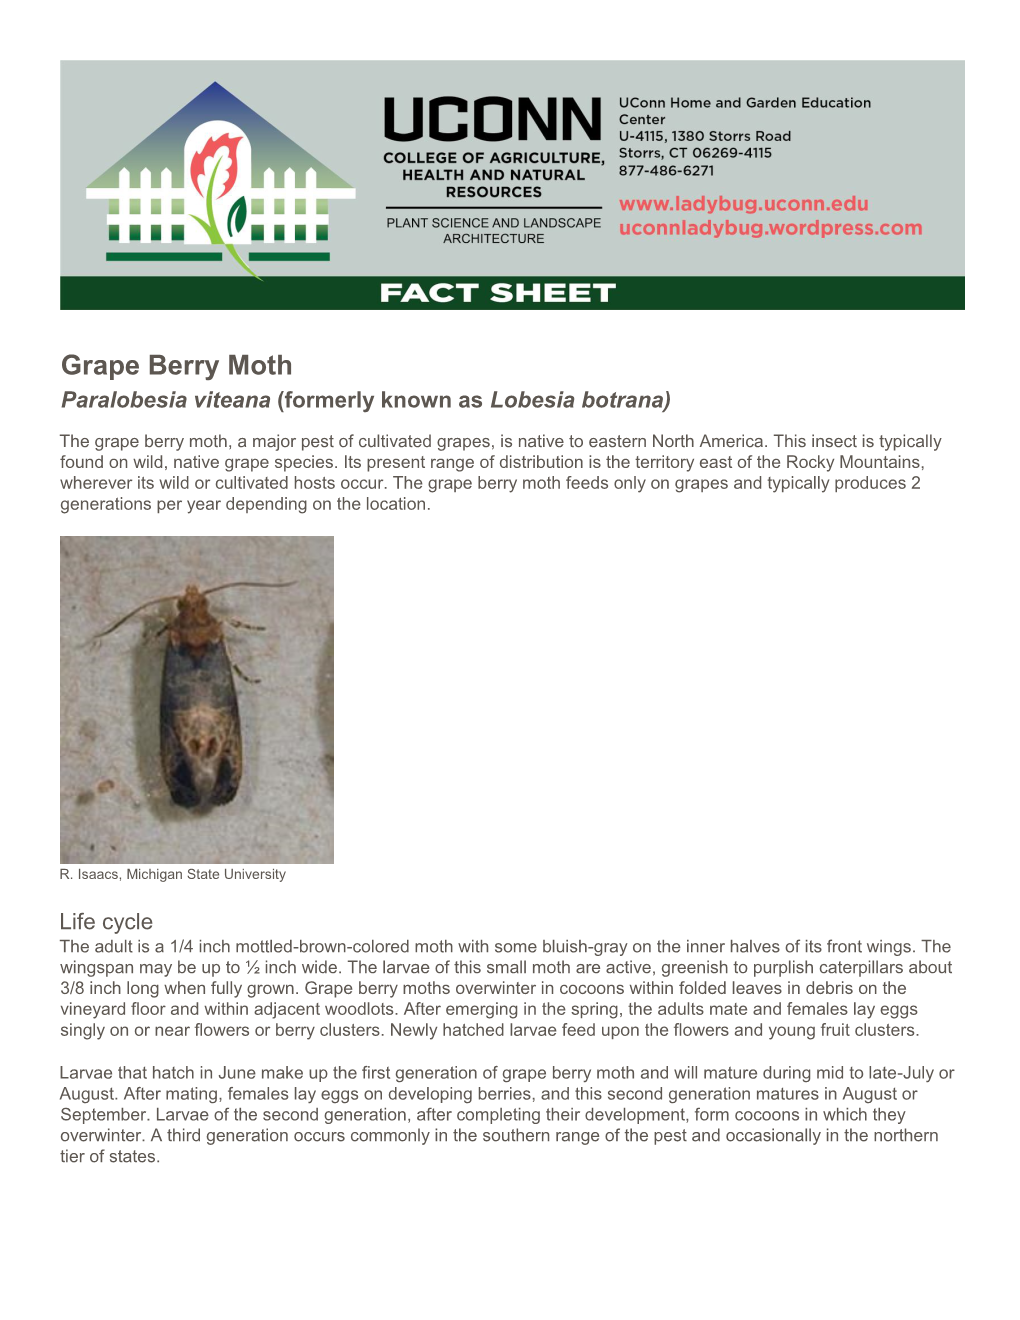 Grape Berry Moth Paralobesia Viteana (Formerly Known As Lobesia Botrana)